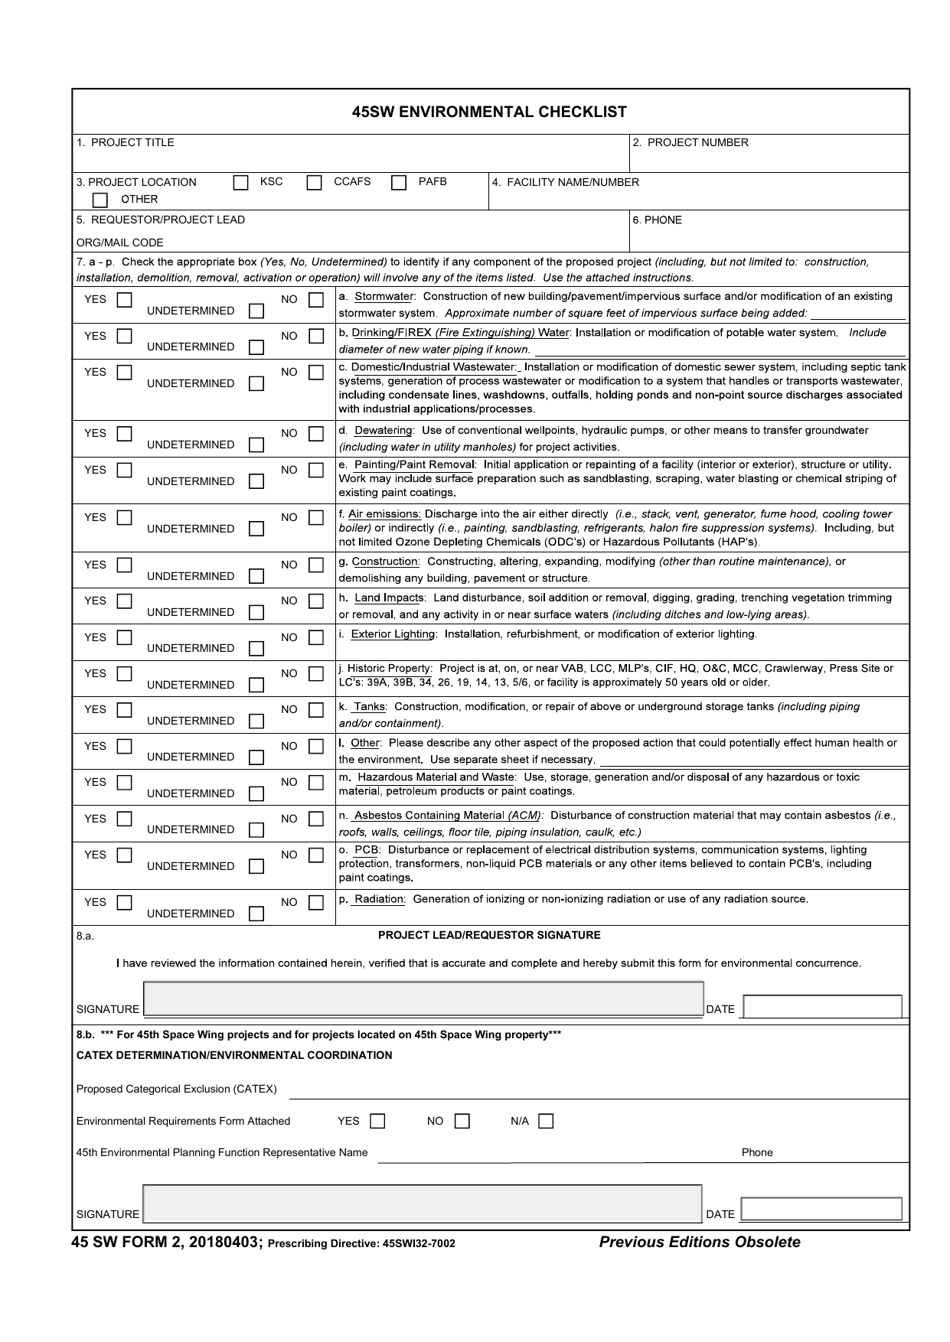 45 SW Form 2 45sw Environmental Checklist, Page 1